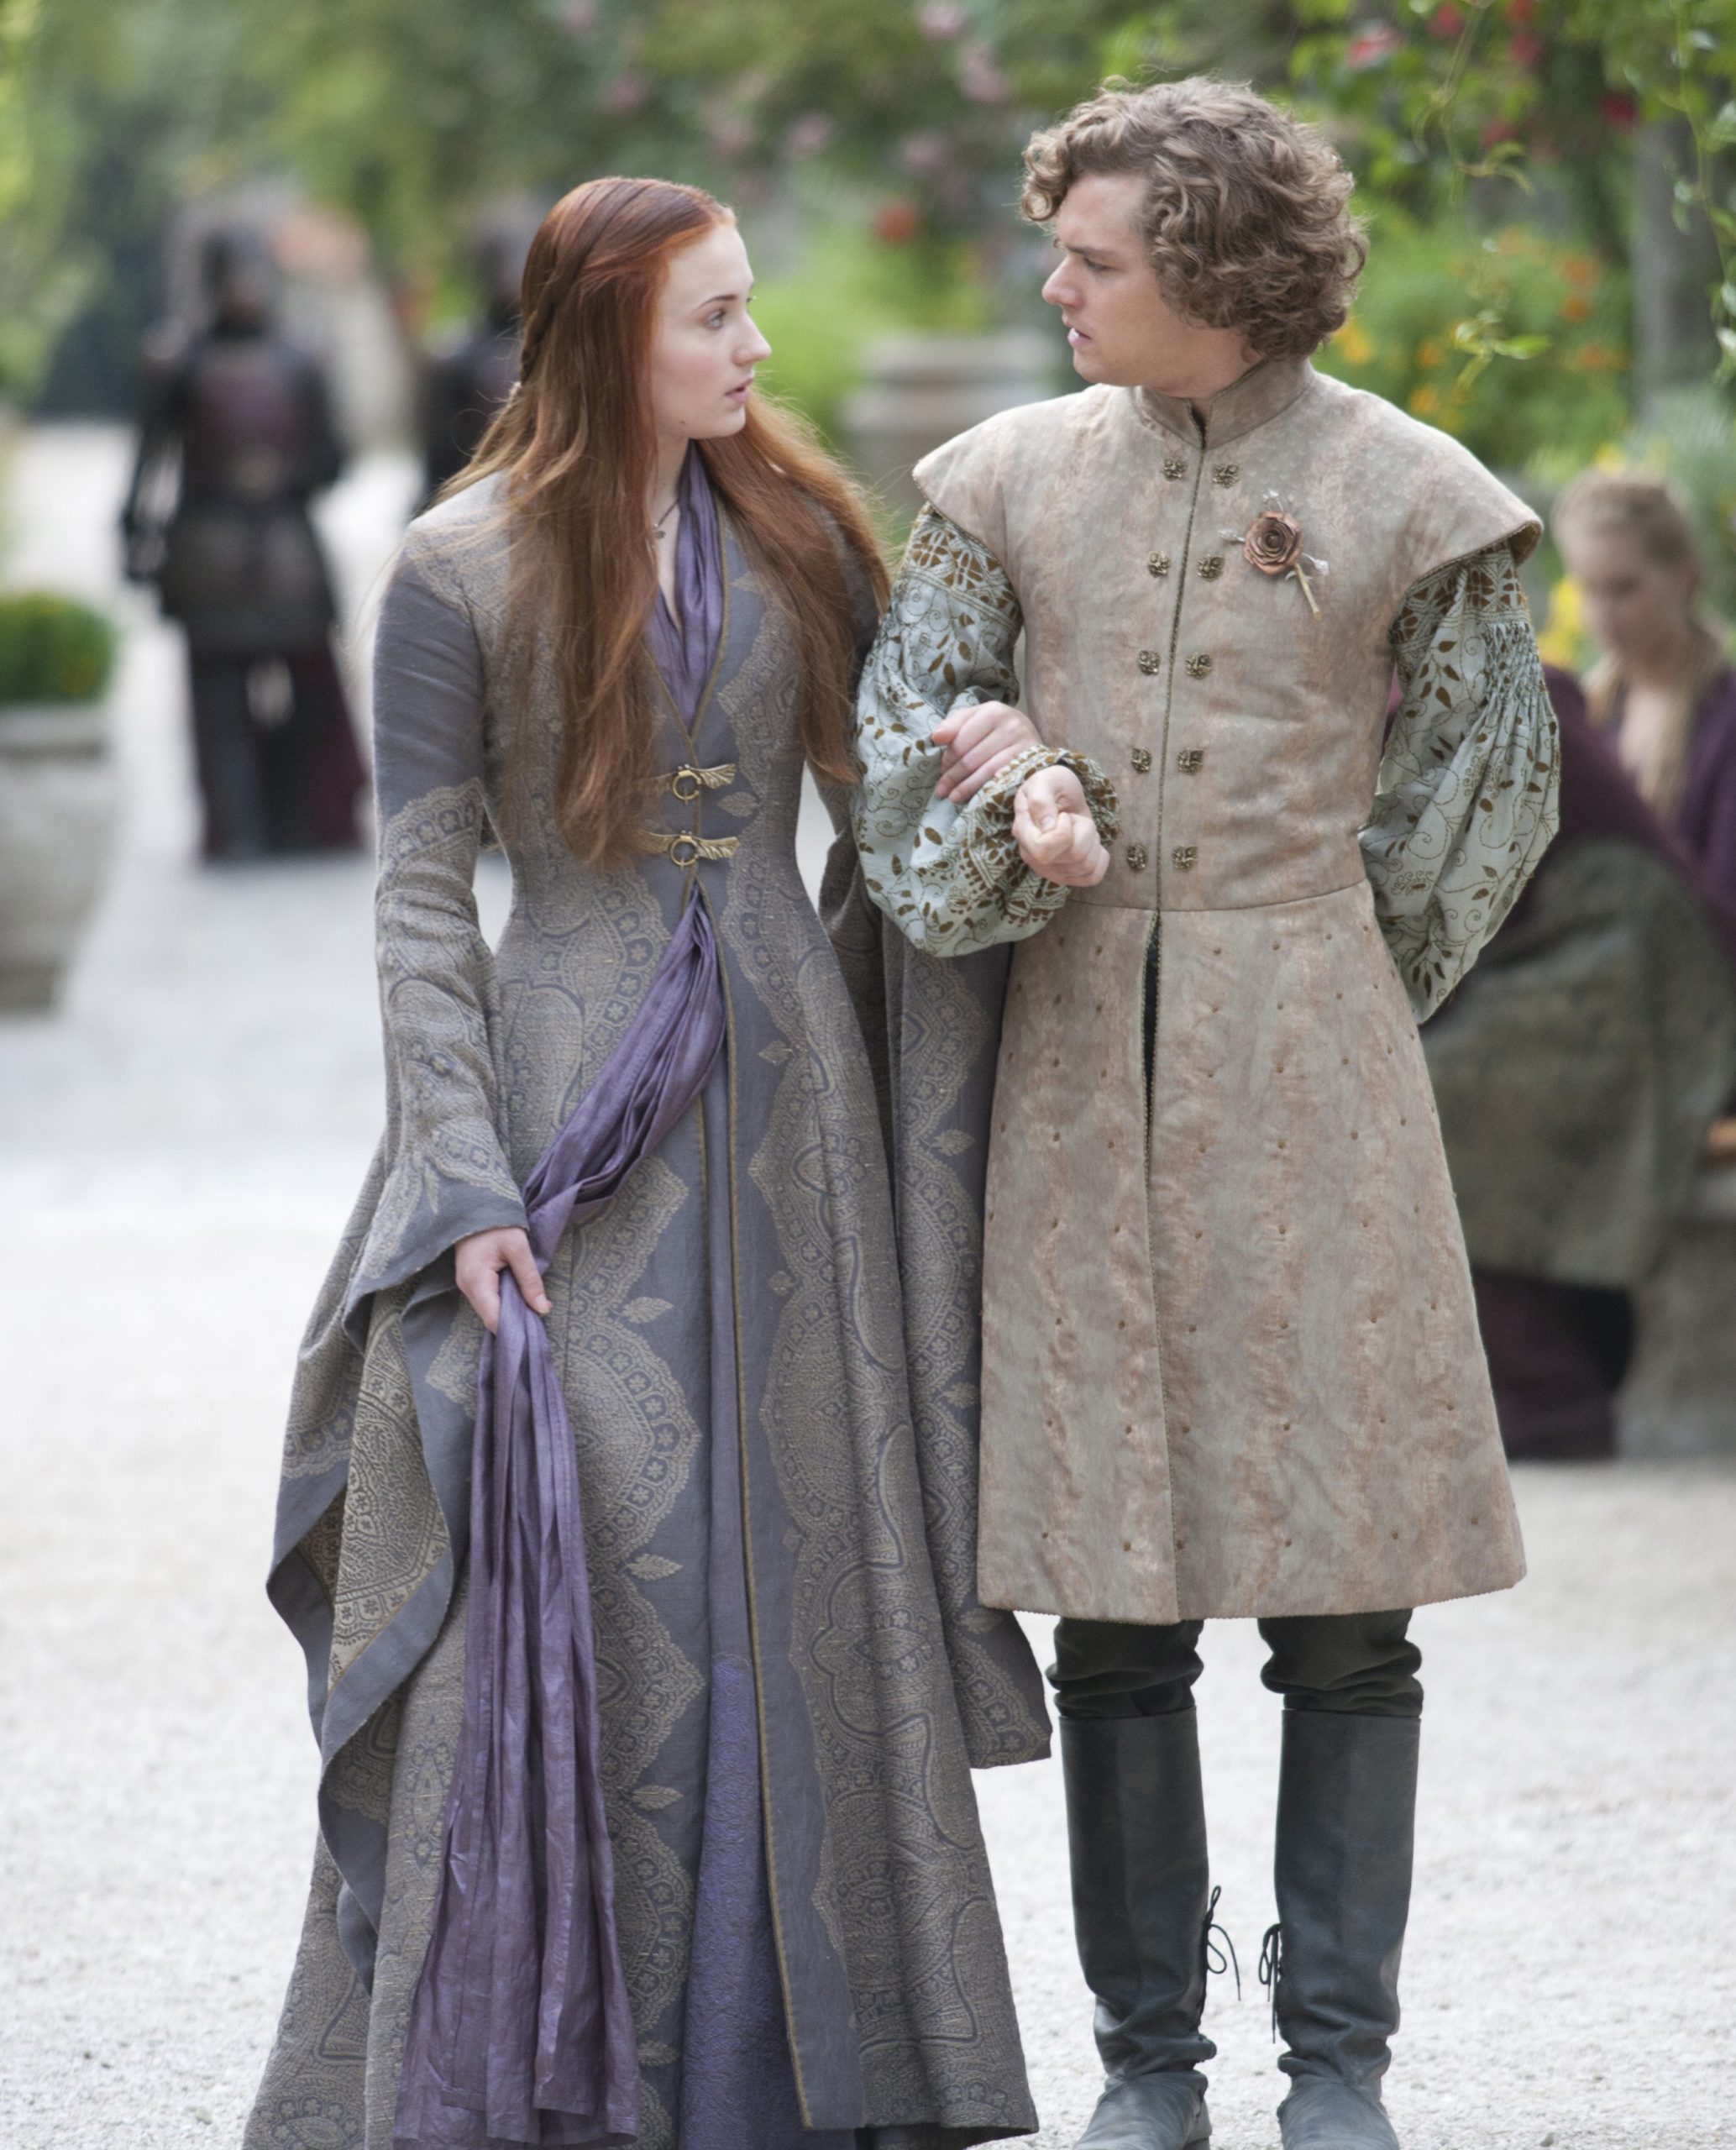 How Sansa’s Development Is Mirrored In Her Fashion